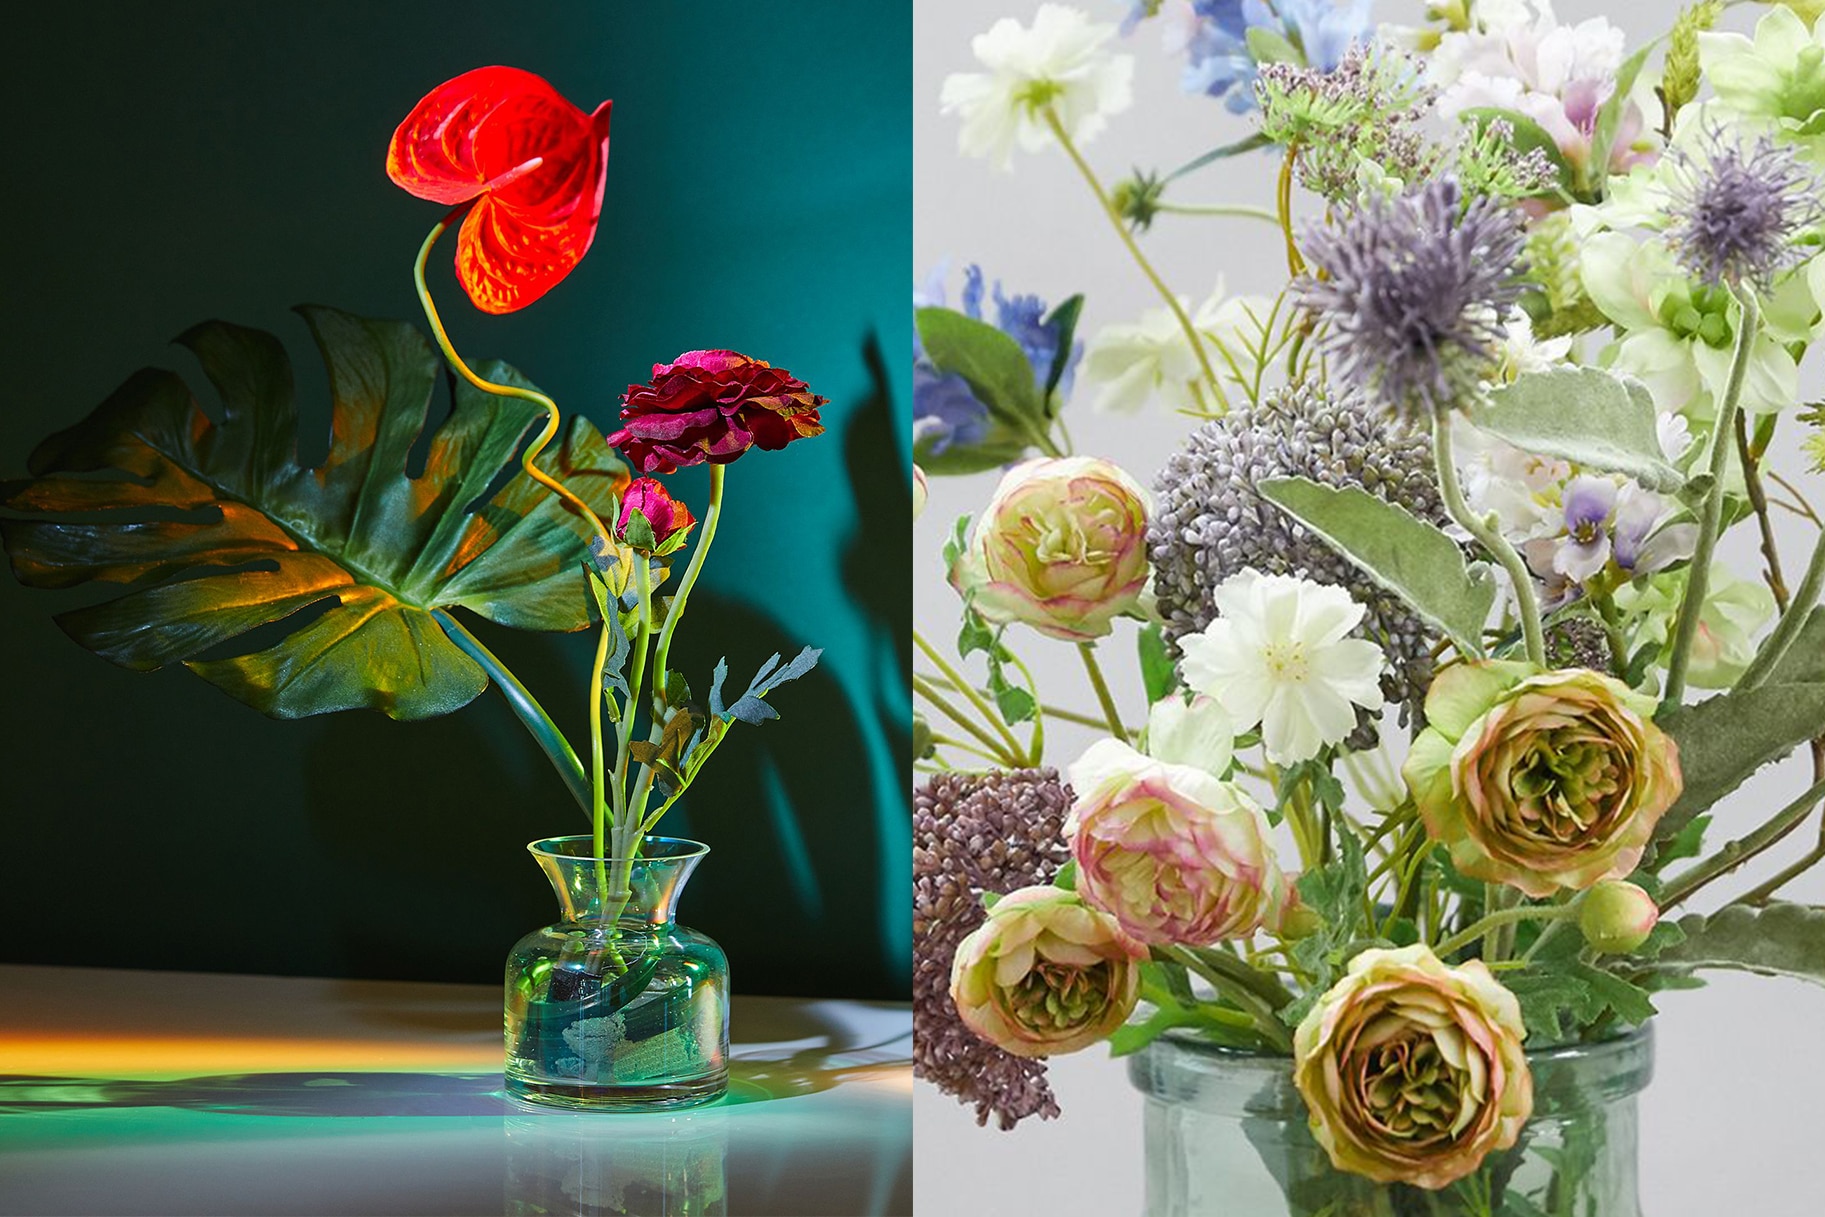 Best Realistic Fake Flowers: Faux Flower Bouquets